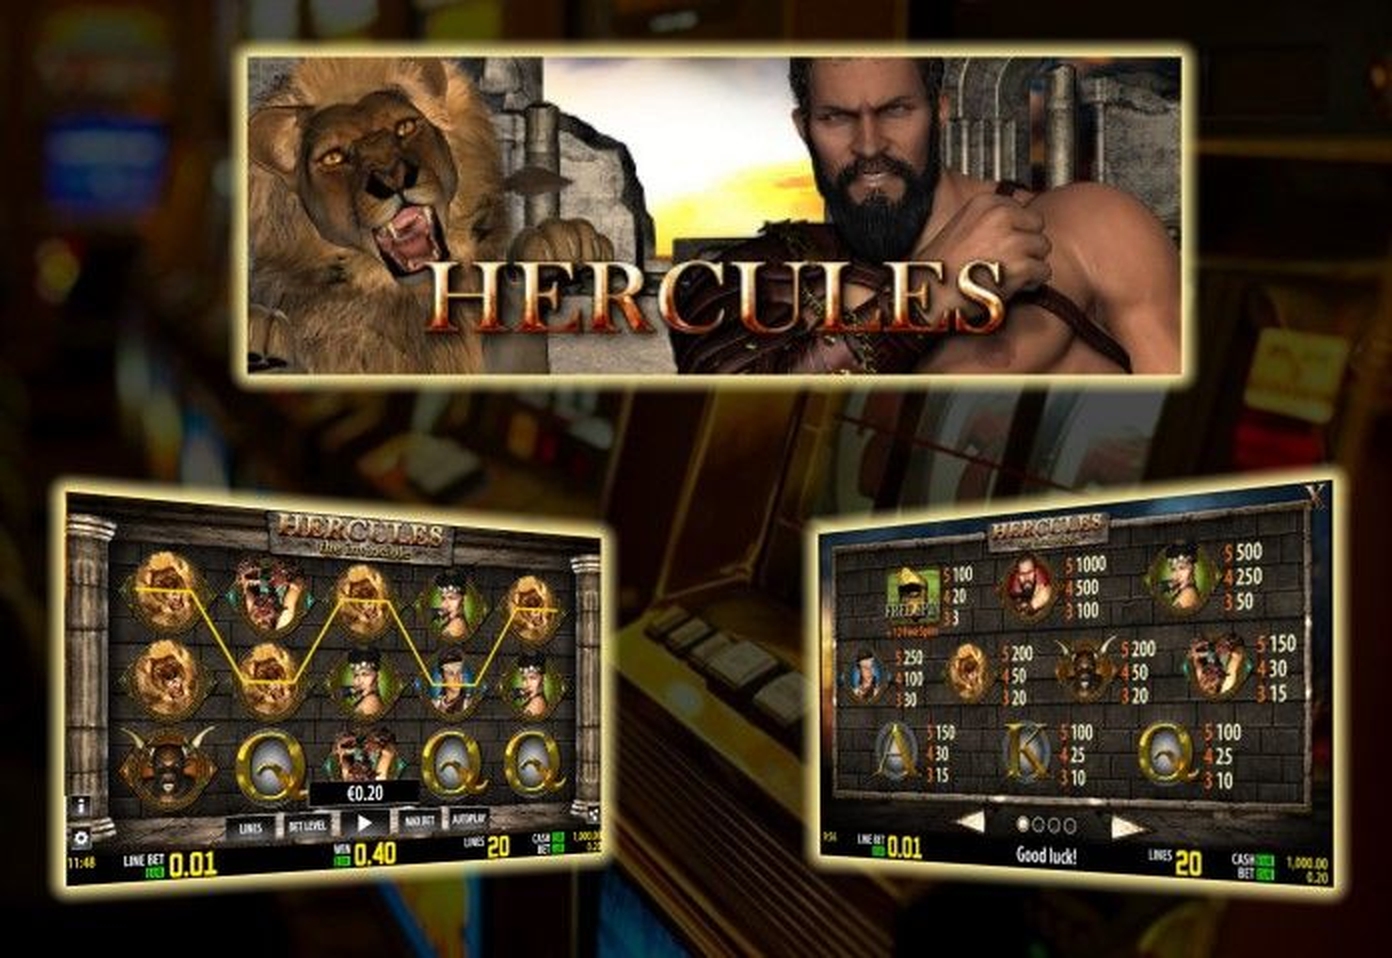 Hercules HD demo